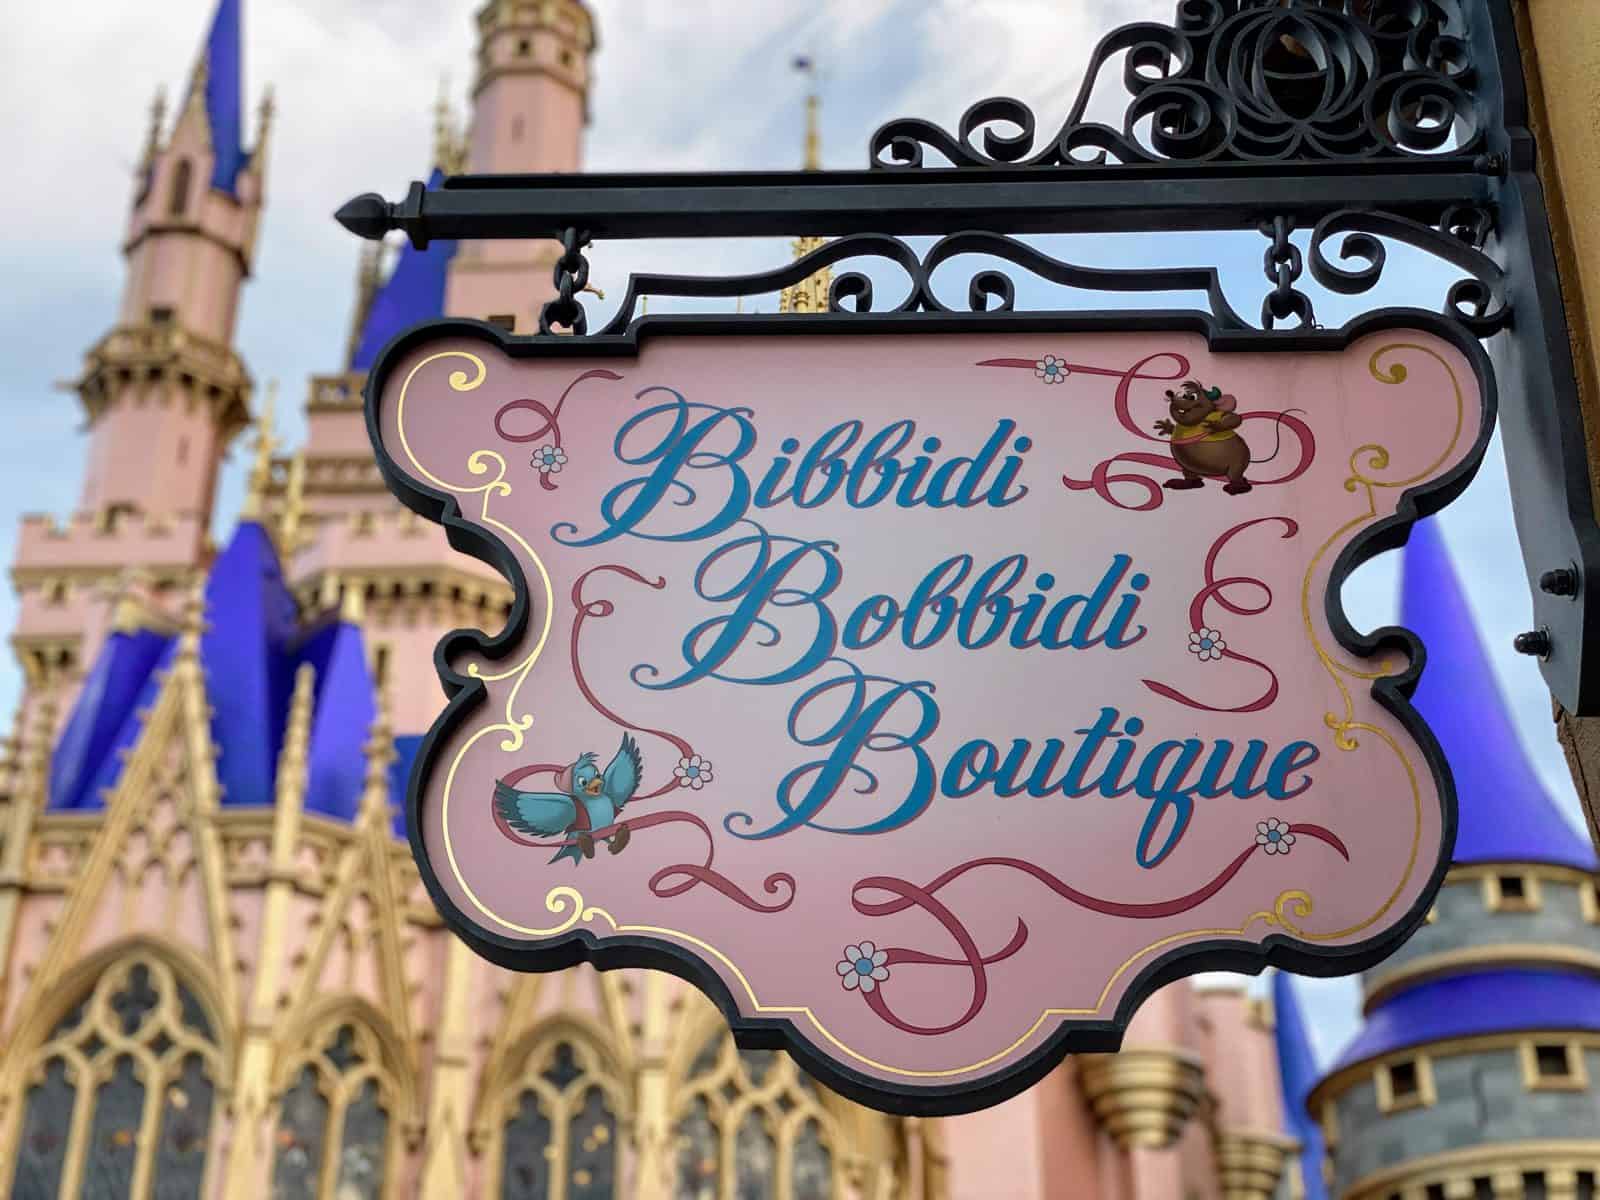 Bibbidi Bobbidi Boutique sign at Magic kingdom